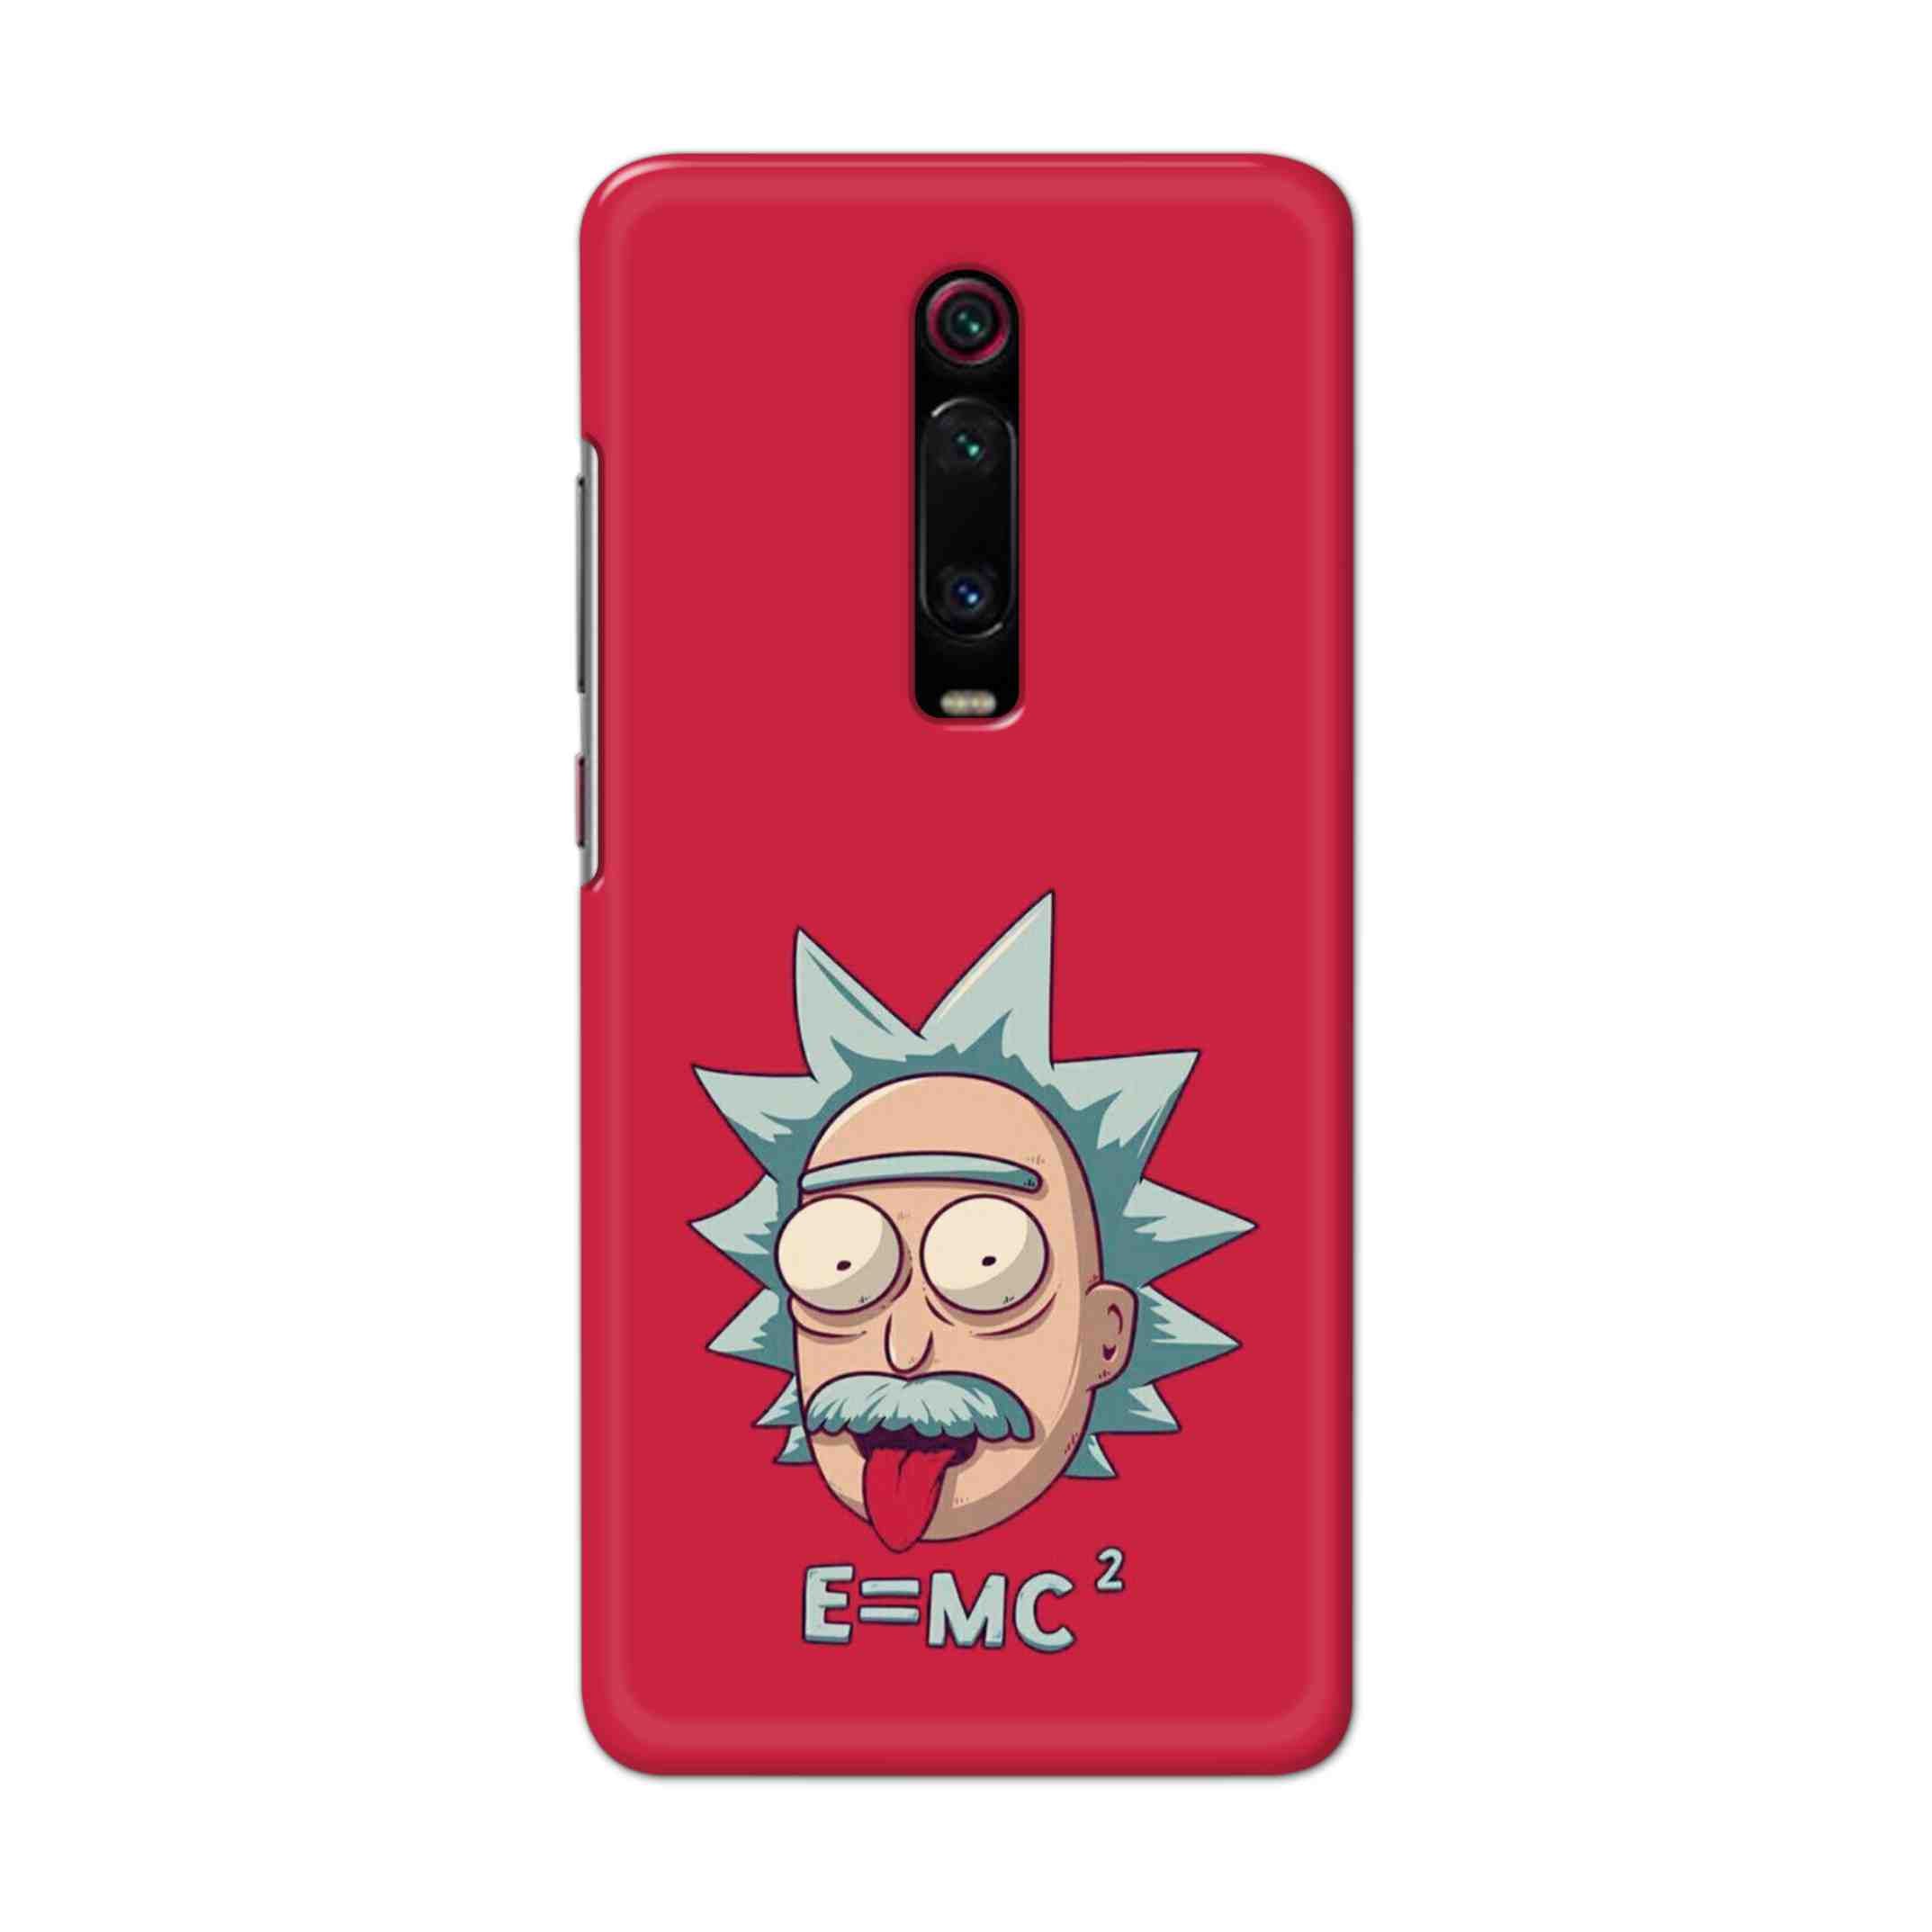 Buy E=Mc Hard Back Mobile Phone Case Cover For Xiaomi Redmi K20 Online